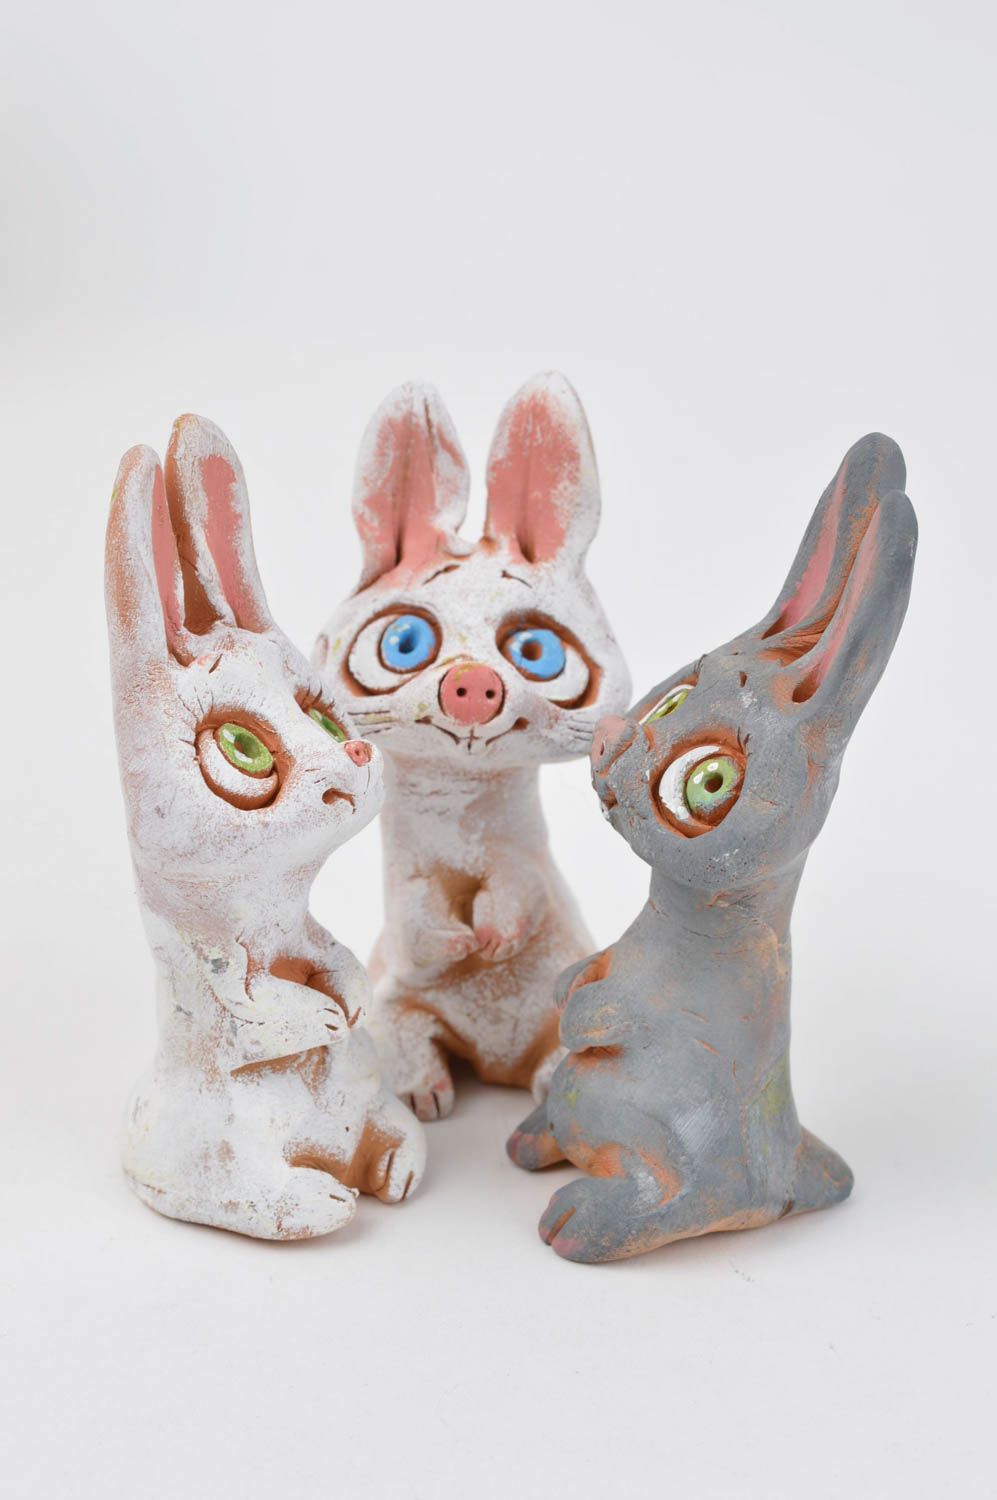 Handmade designer statuette 3 ceramic rabbits unusual home decor ideas photo 4